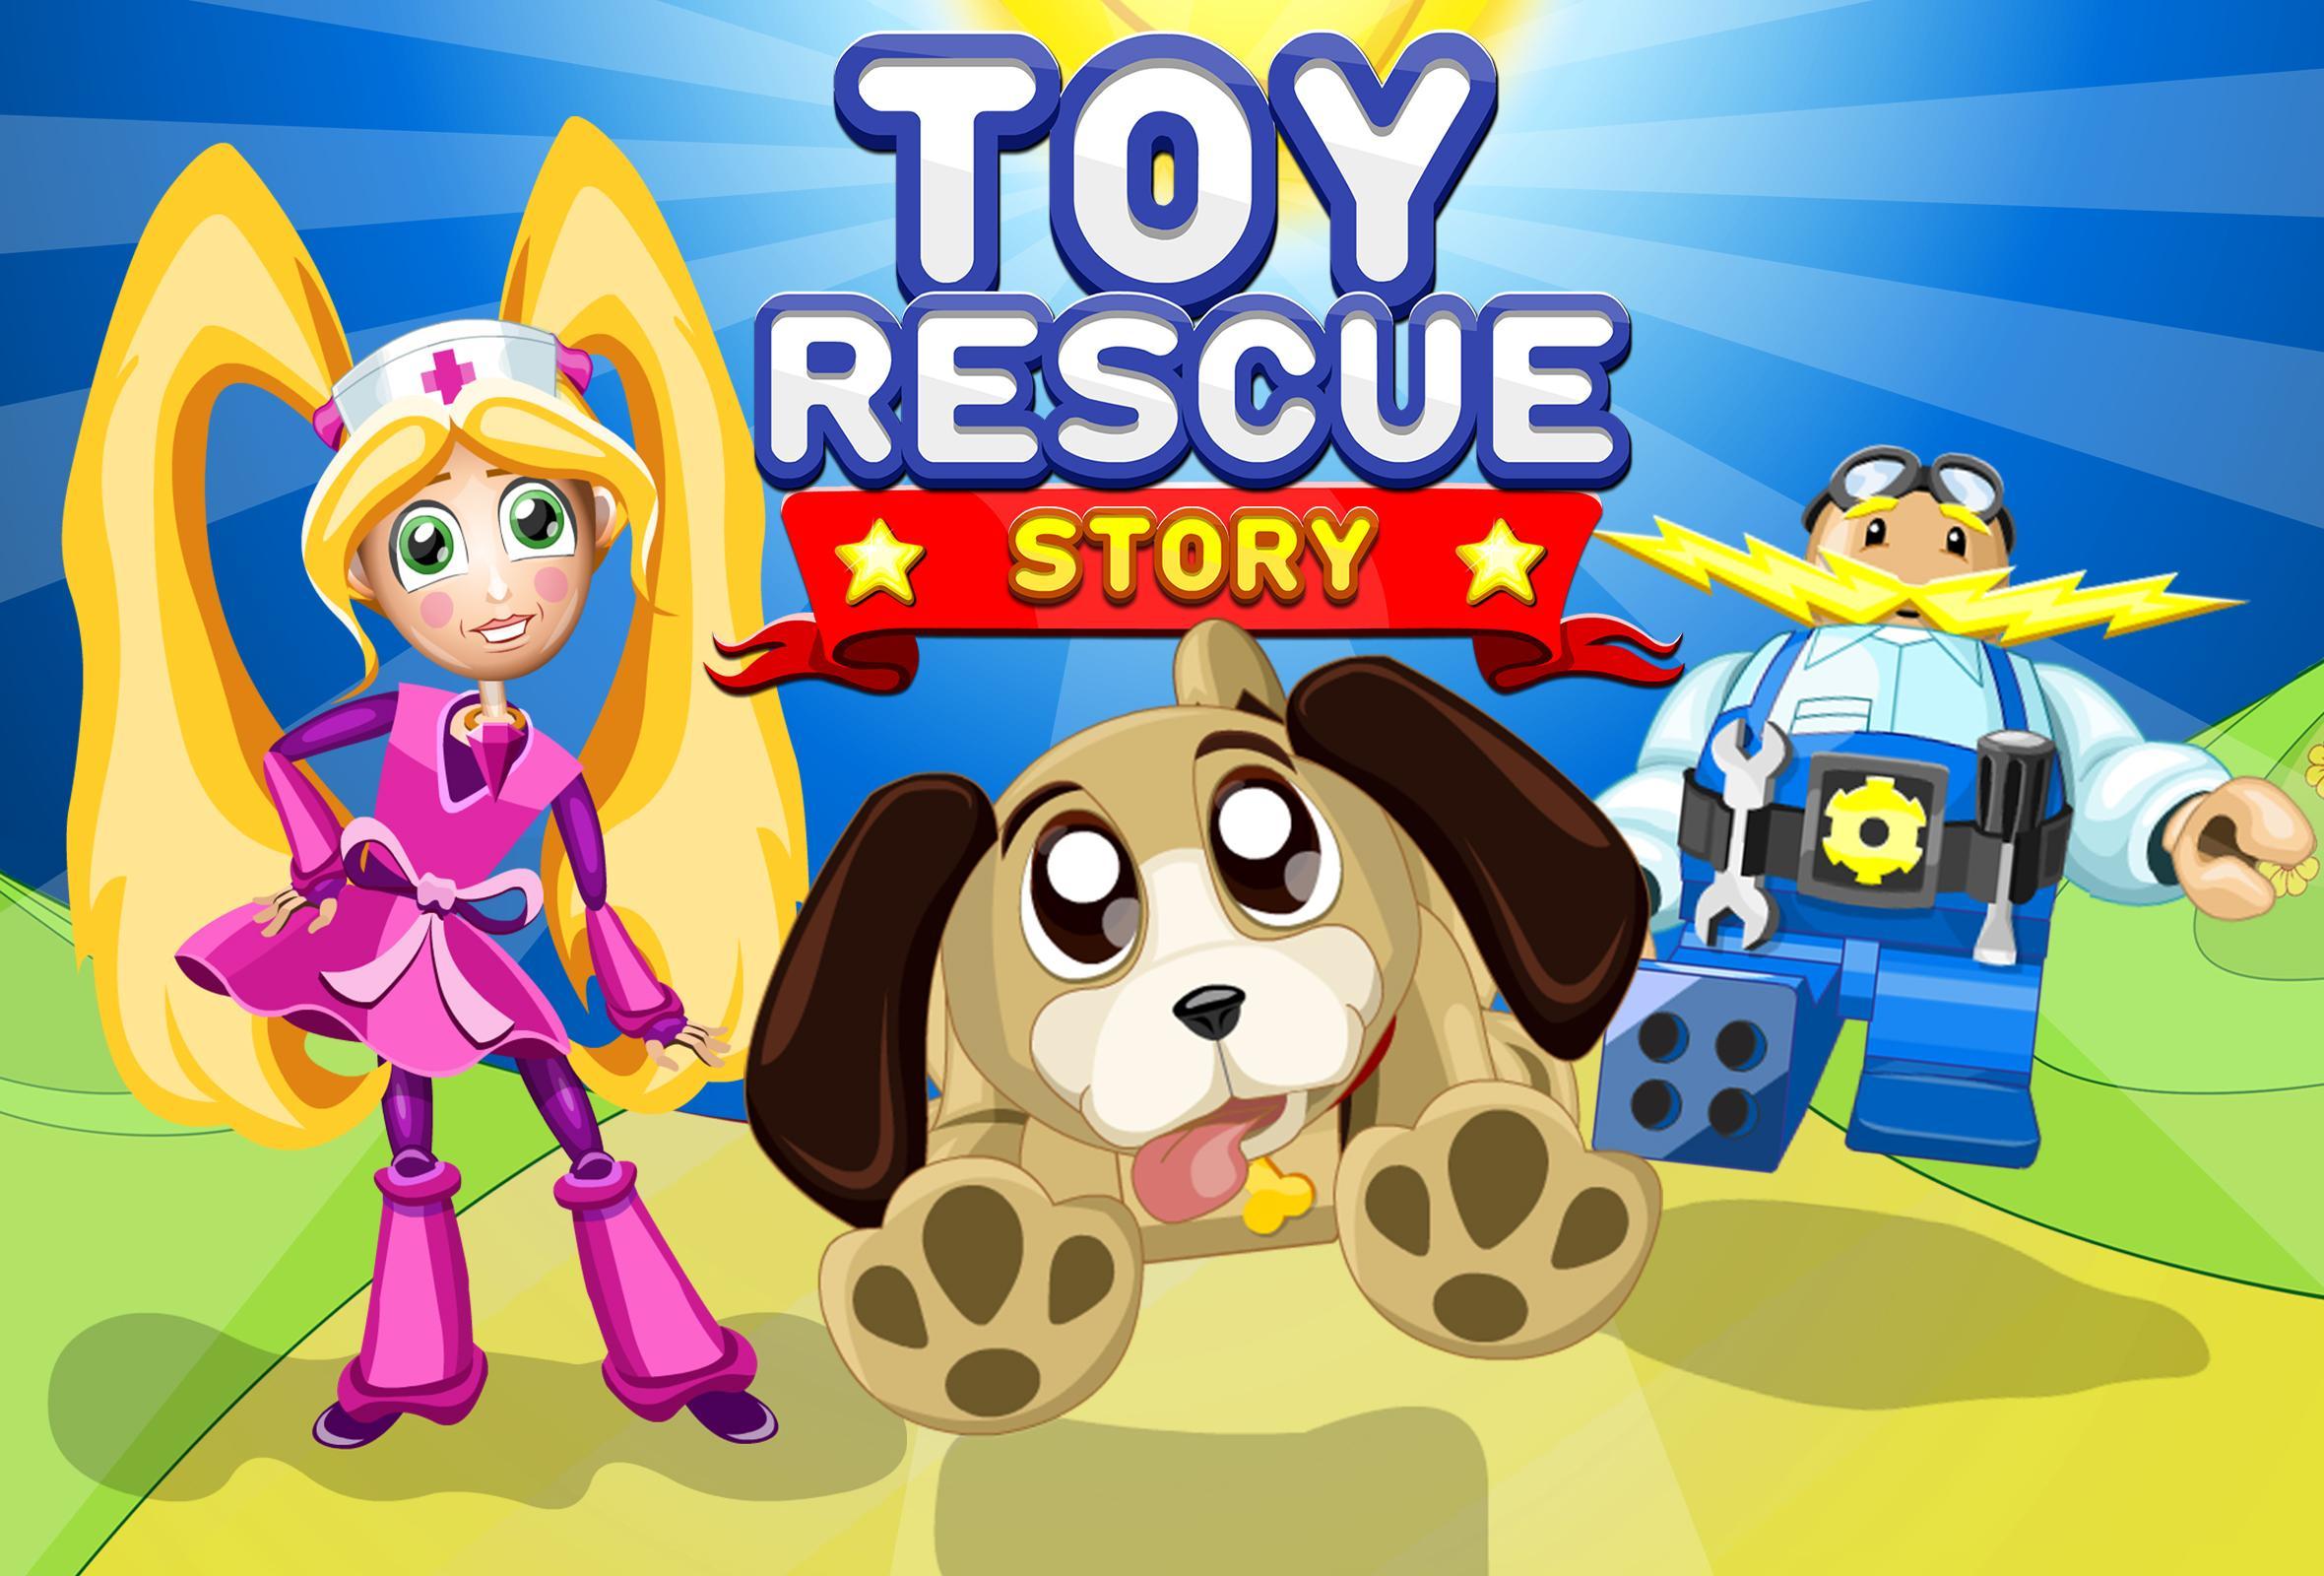 Toy rescue